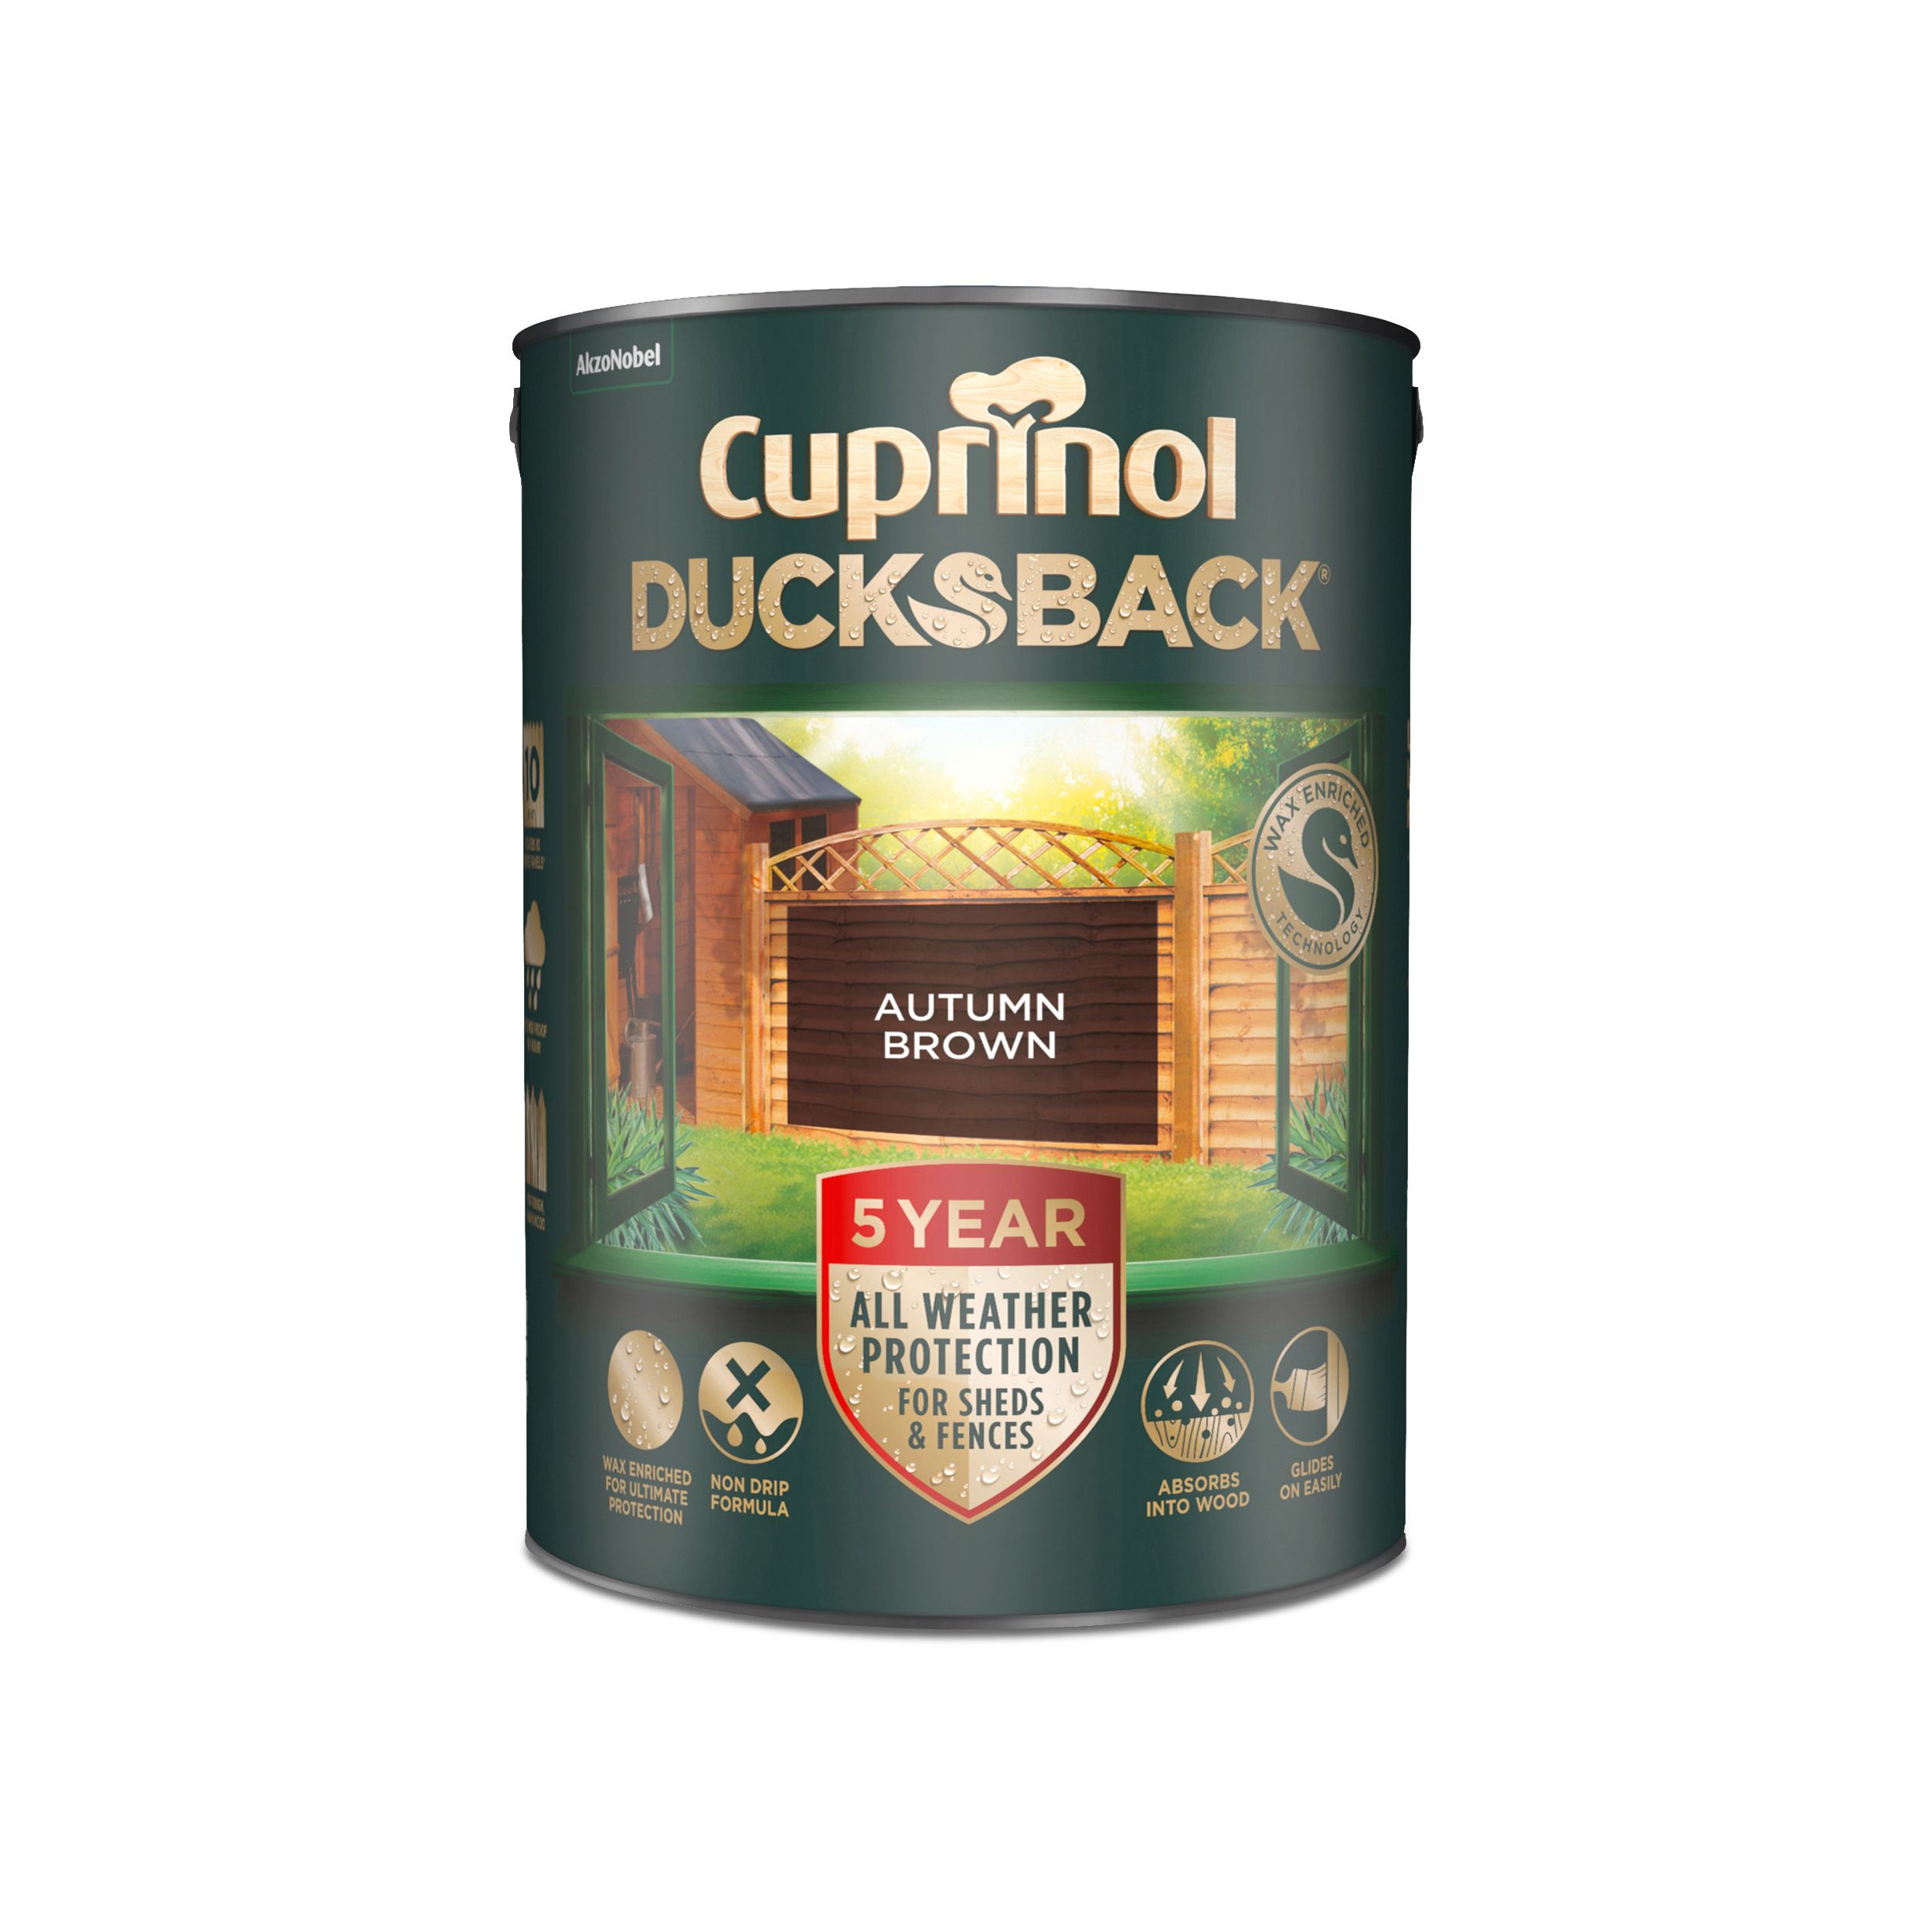 Cuprinol 5 year ducksback Autumn brown Fence & shed Treatment, 5L